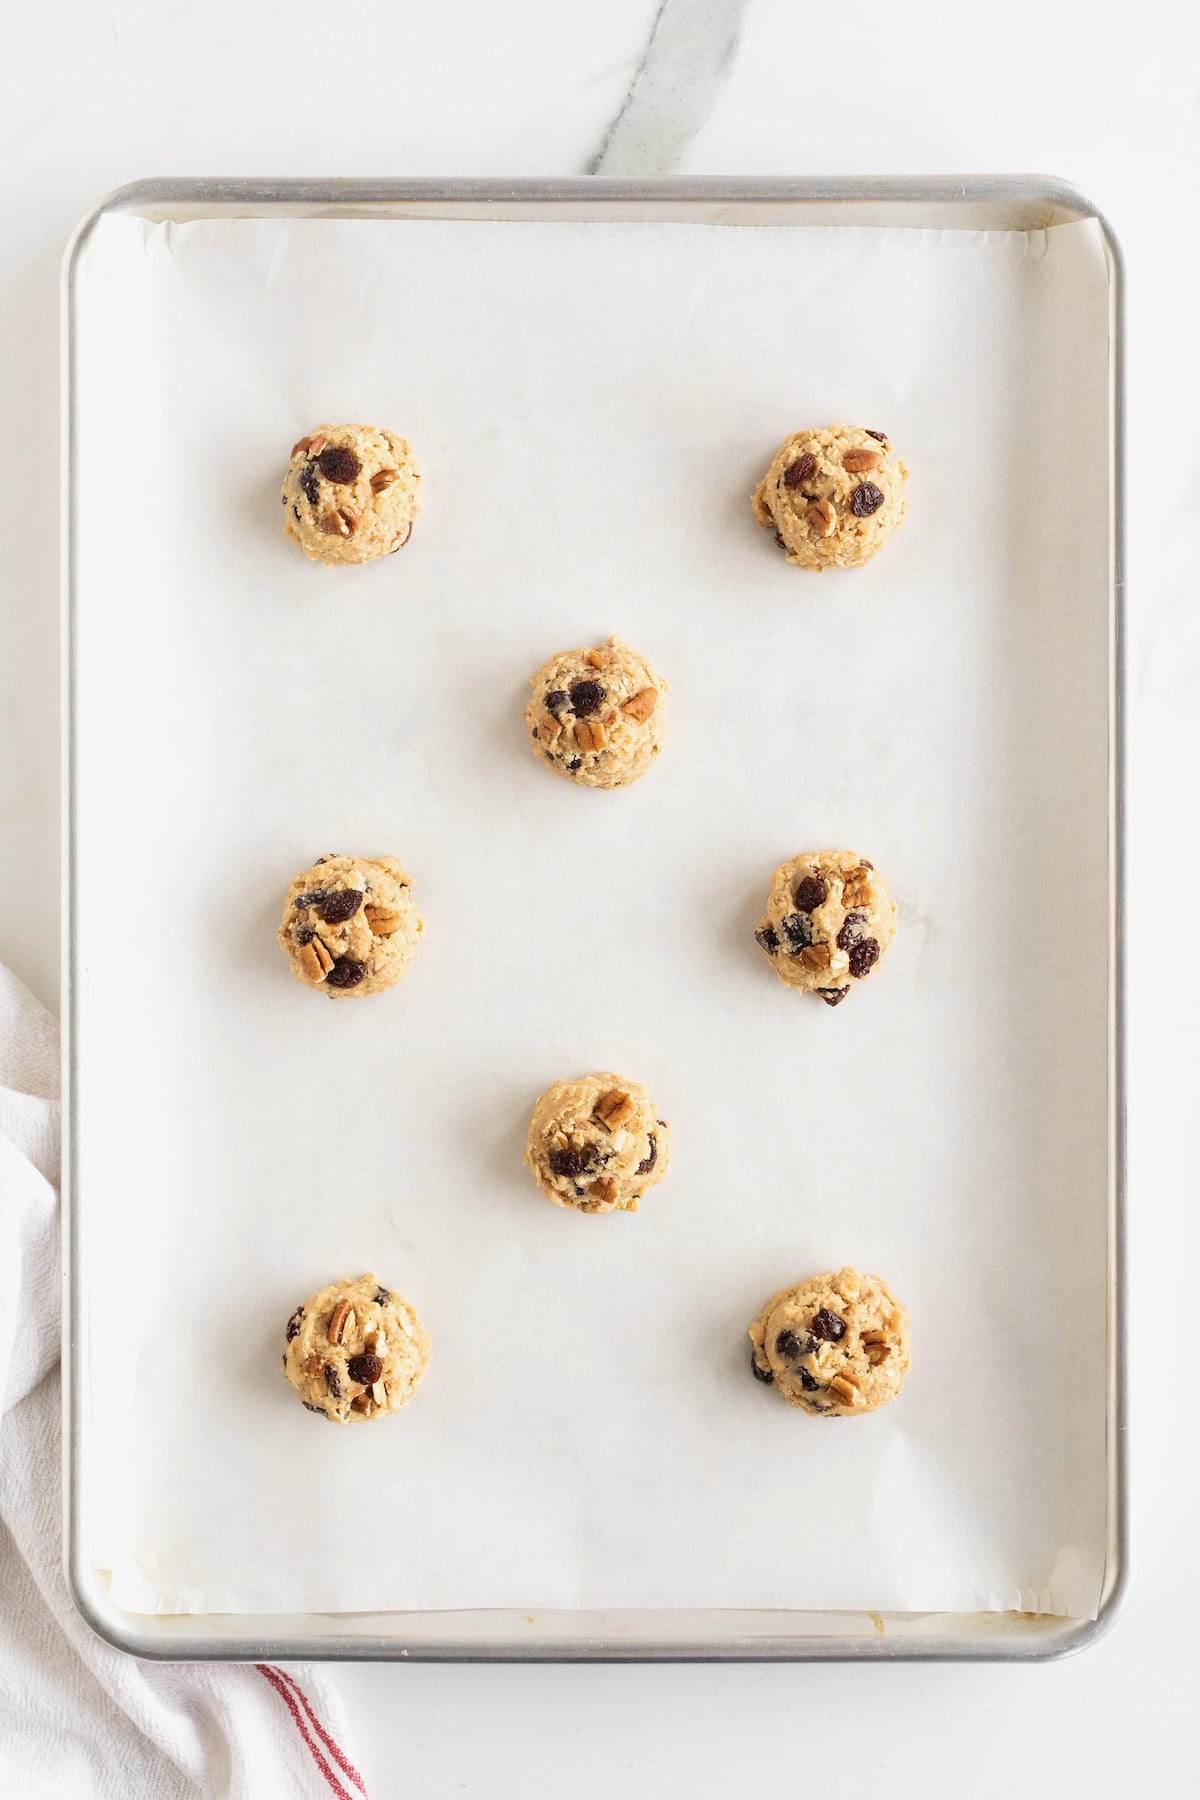 Eight oatmeal cookie dough balls on a parchment lined aluminum baking sheet.